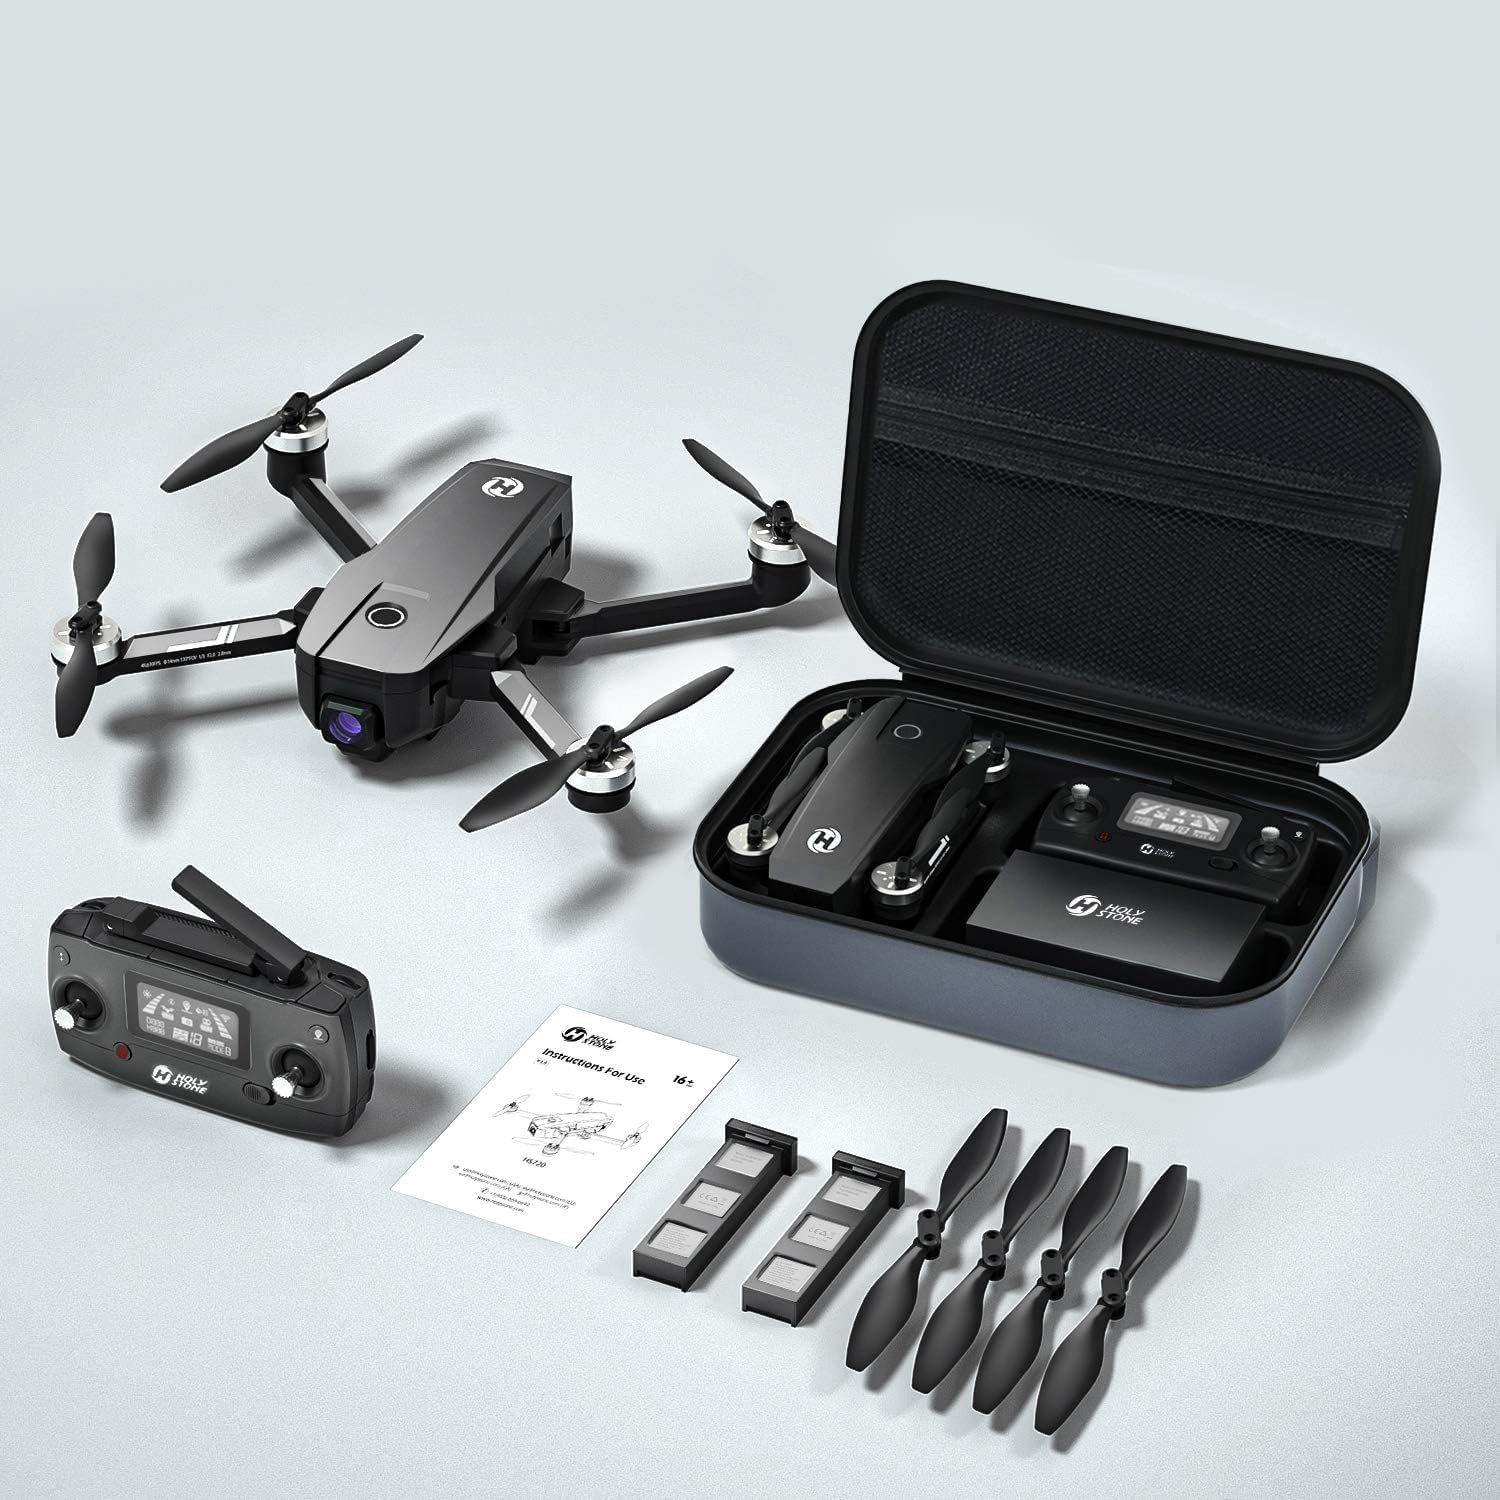 STONE GPS mit 4K Drohne, Kamera EIS Quadrocopter UHD Schwarz